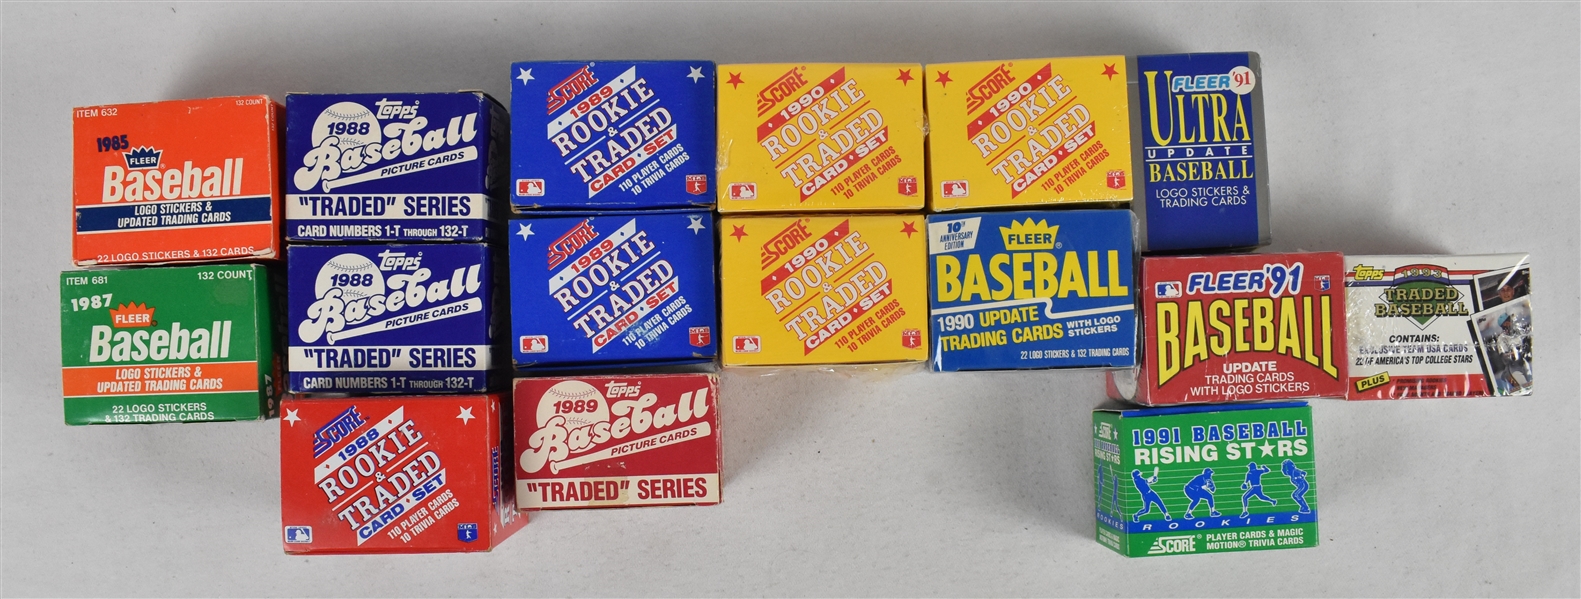 MLB Update & Traded Baseball Card Sets